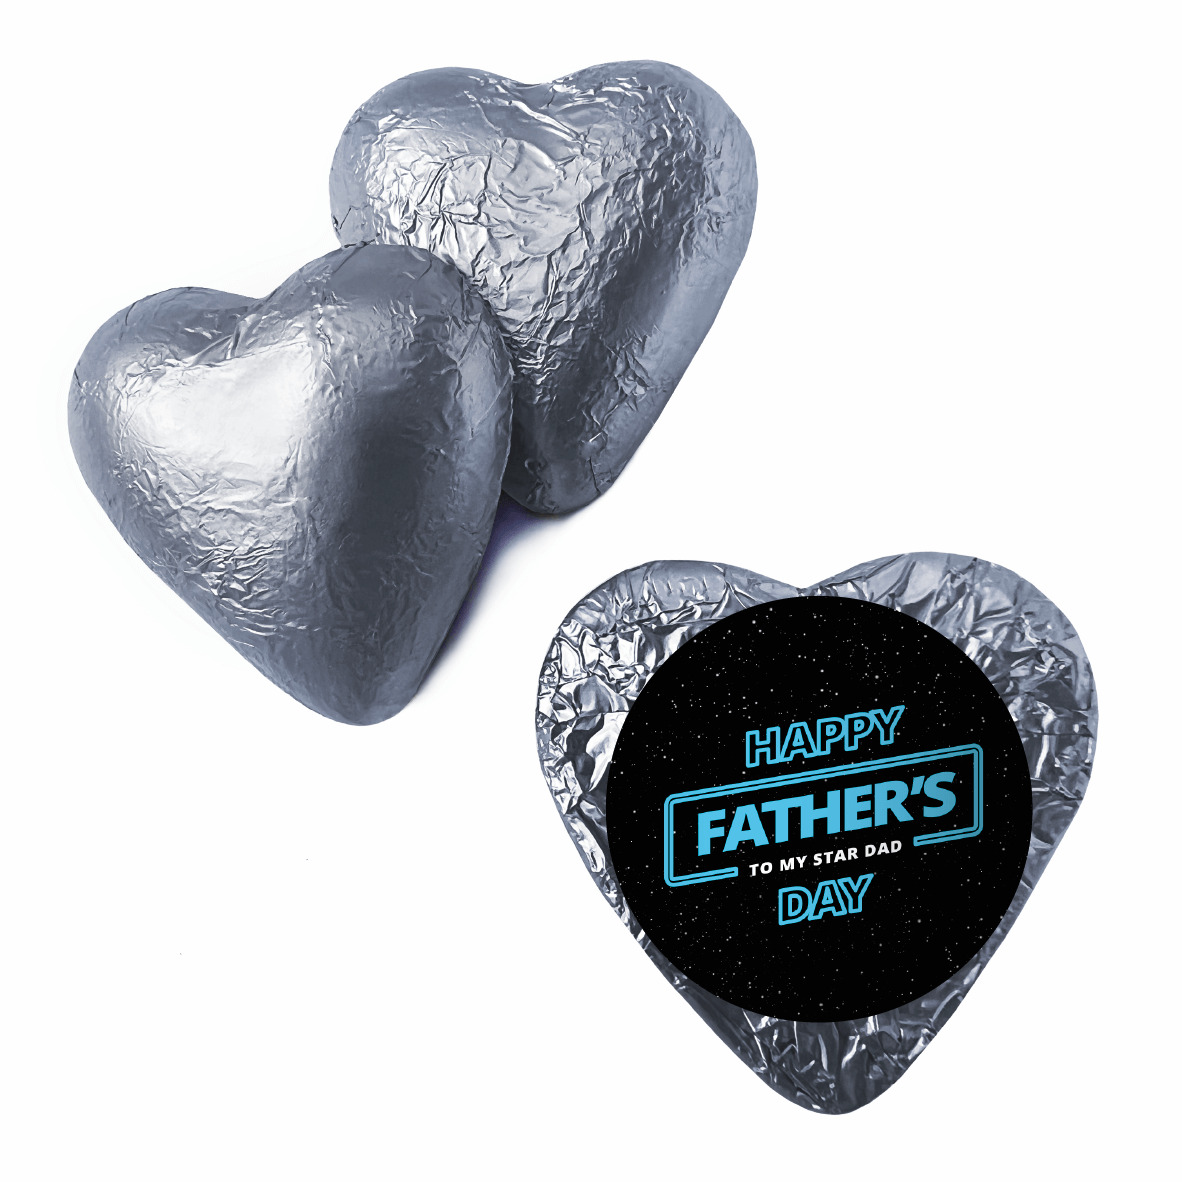 Shop for Galaxy Father's Day silver foil heart - Australia